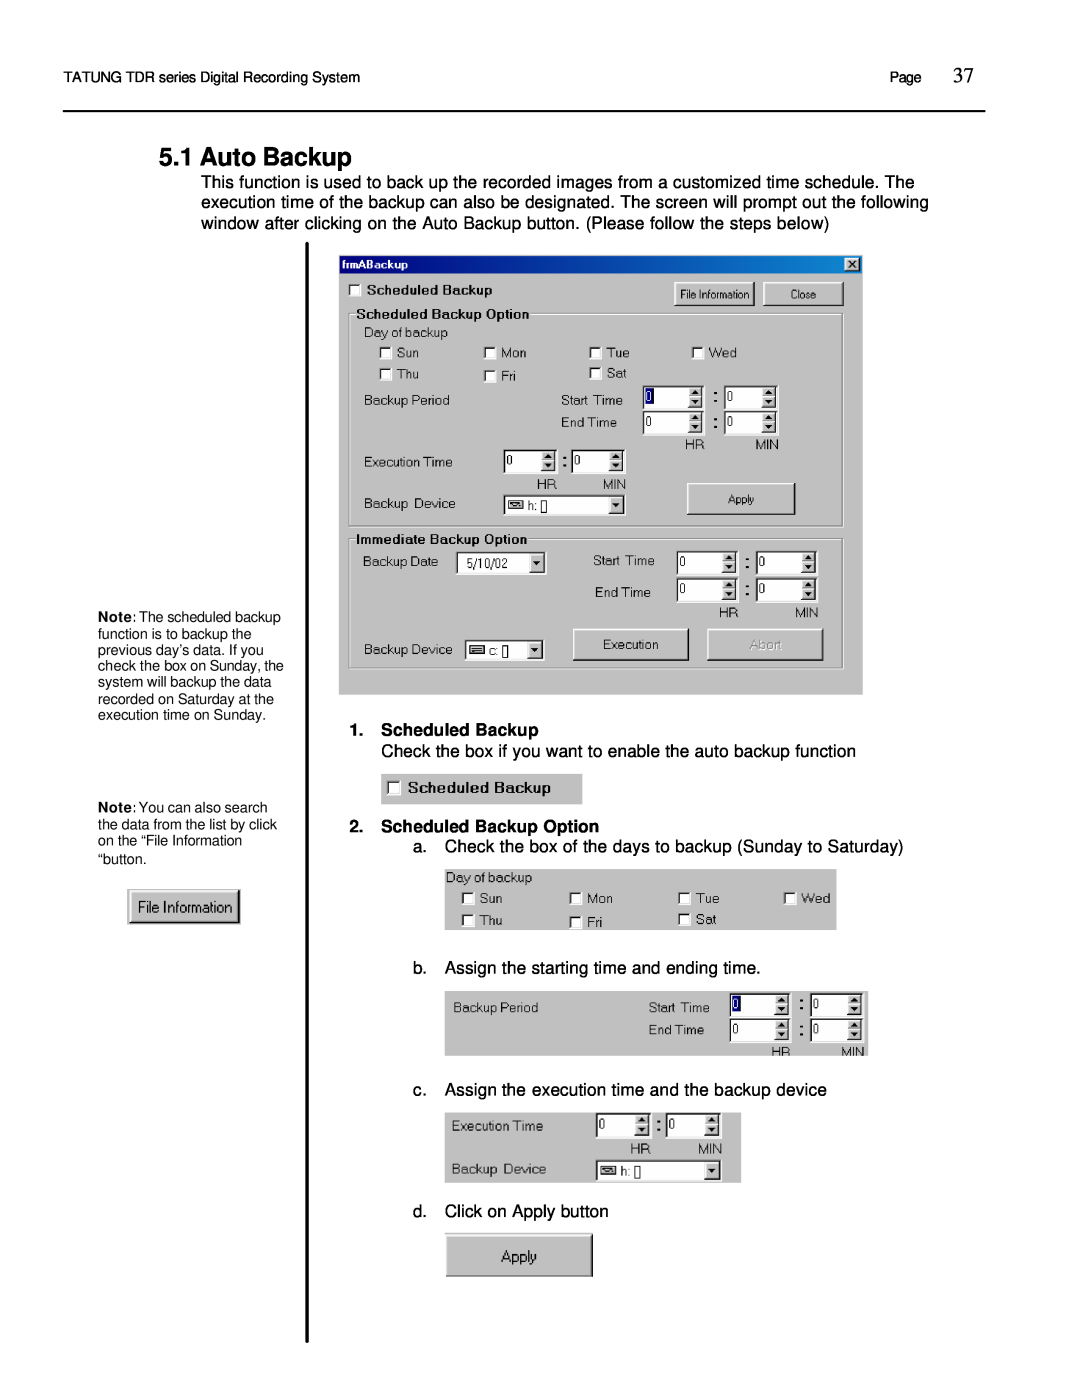 Tatung TDR-22XX operation manual Auto Backup, Scheduled Backup Option 